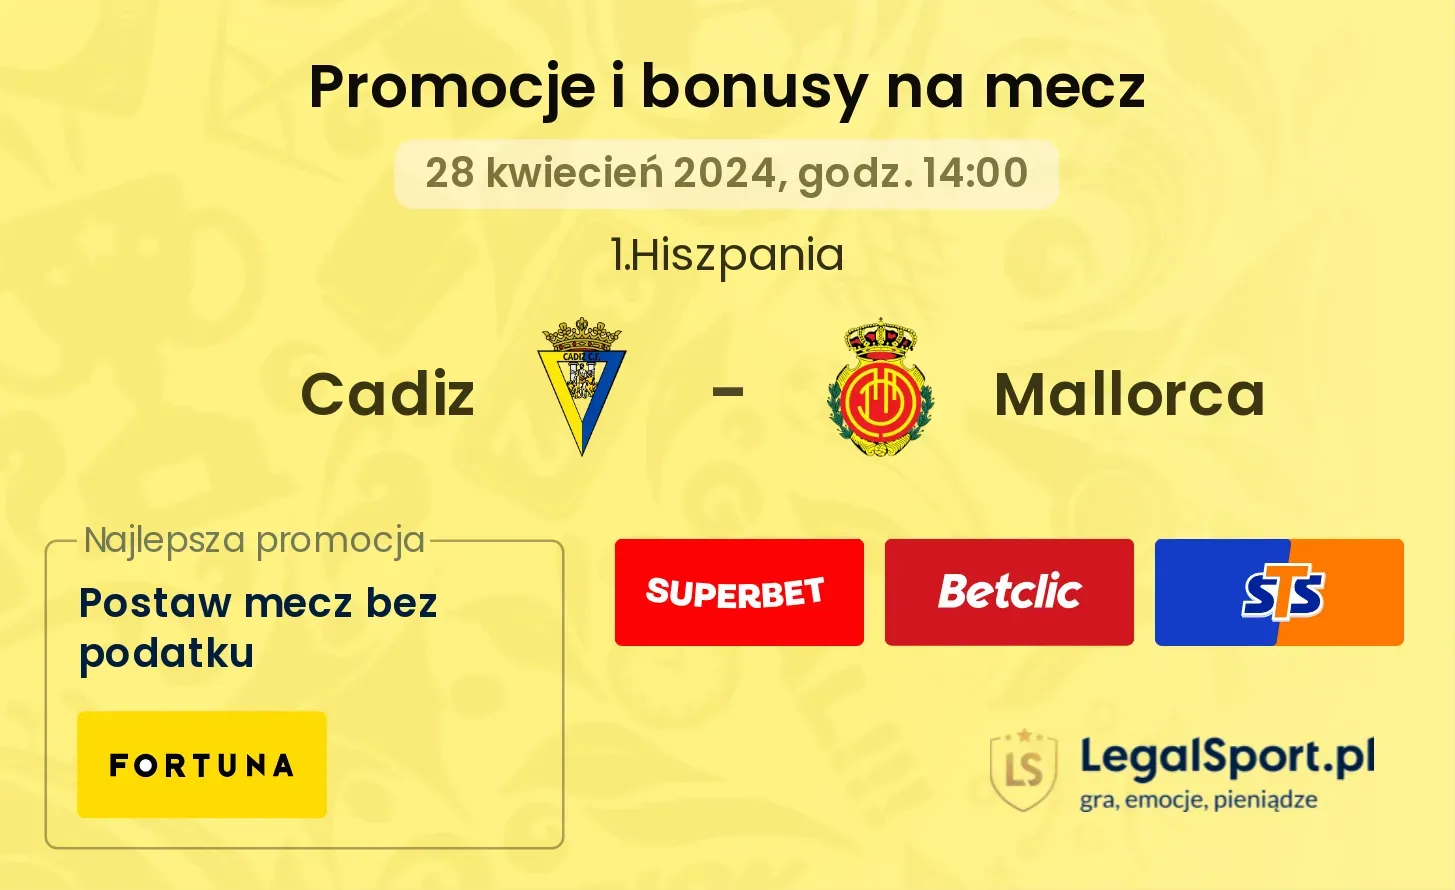 Cadiz - Mallorca promocje bonusy na mecz